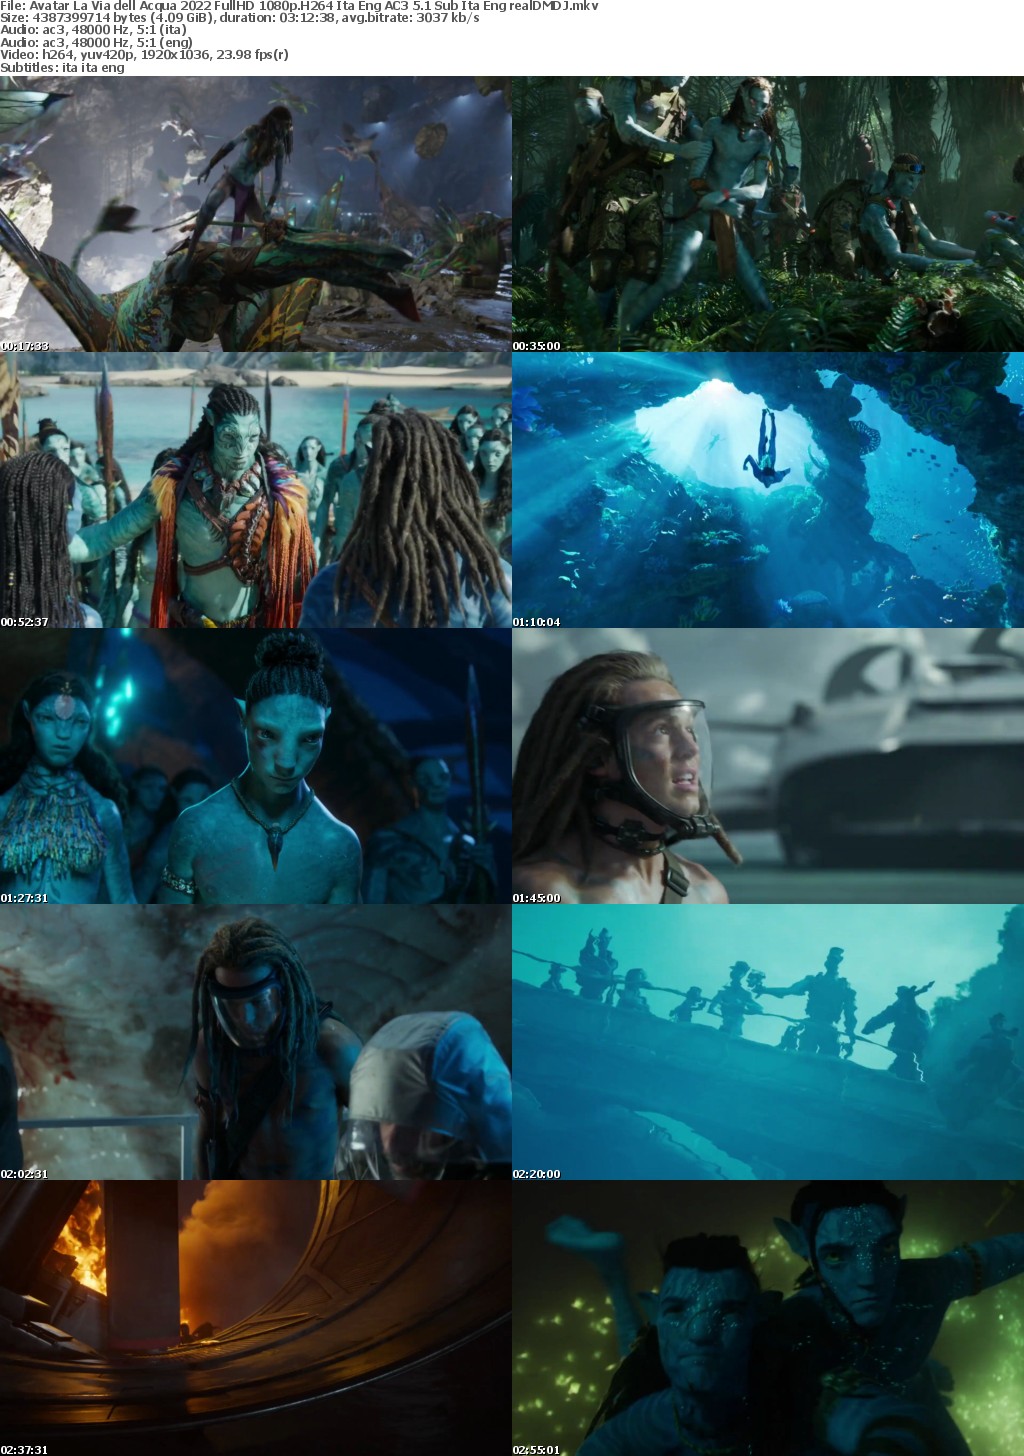 Avatar - The Way of Water (2022) La Via dell #039;Acqua FullHD 1080p H264 Ita Eng AC3 5 1 Sub Ita Eng realDMDJ DDL Ita